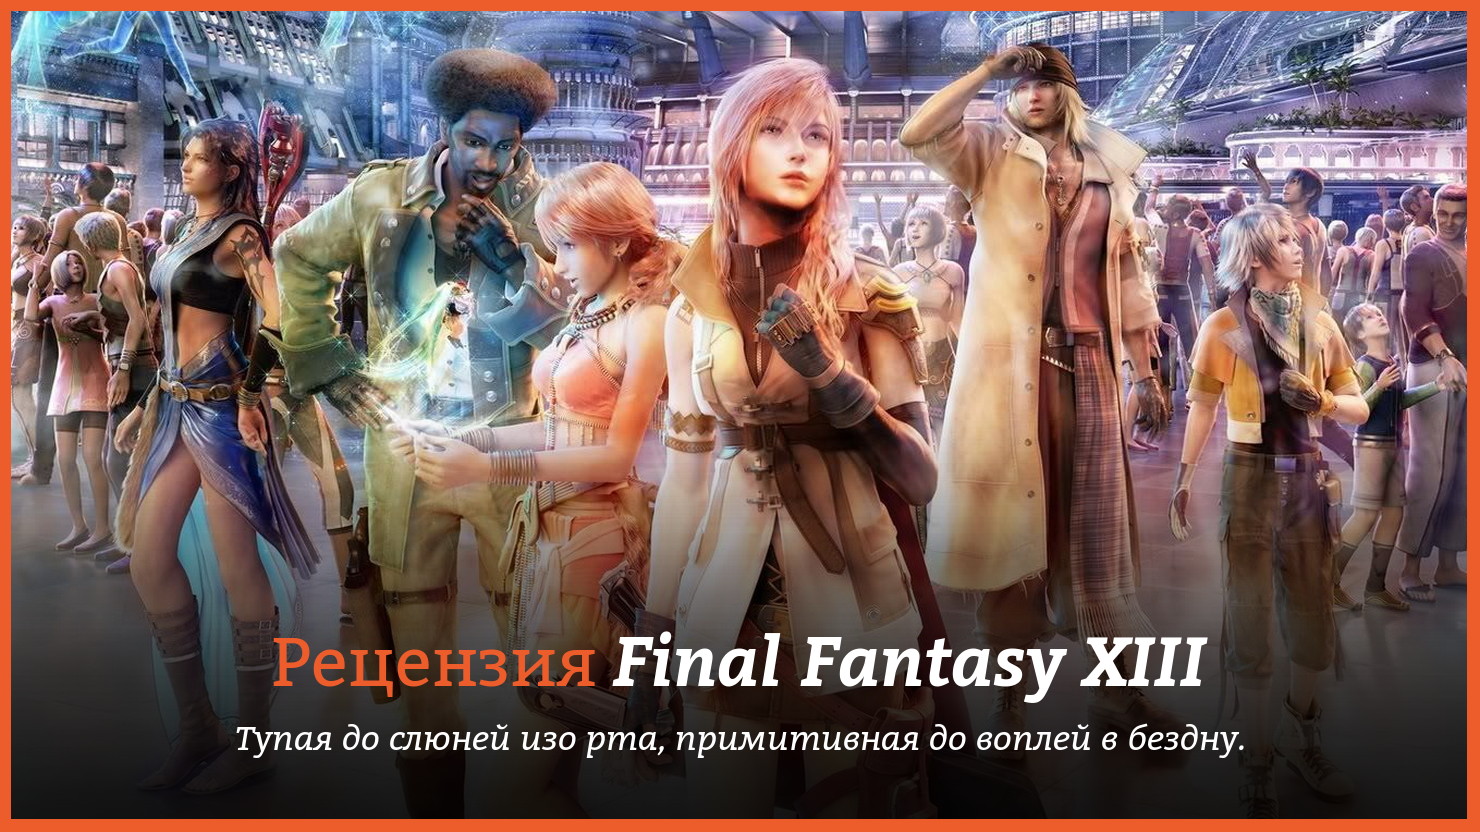 Peцeнзия и oтзывы нa игpy Final Fantasy XIII